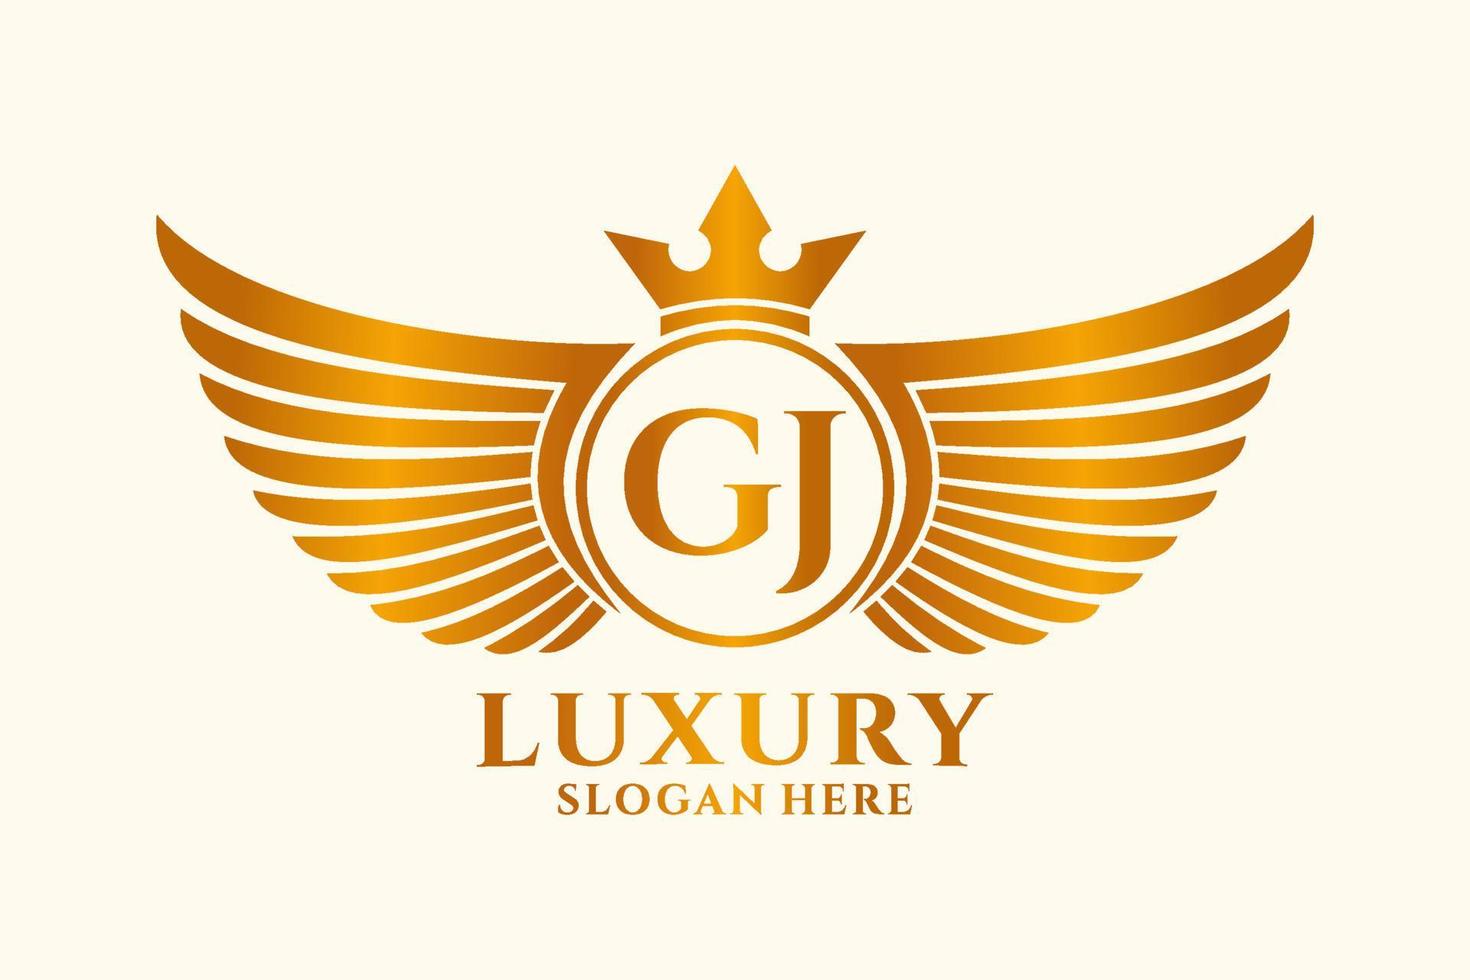 luxe Koninklijk vleugel brief gj kam goud kleur logo vector, zege logo, kam logo, vleugel logo, vector logo sjabloon.